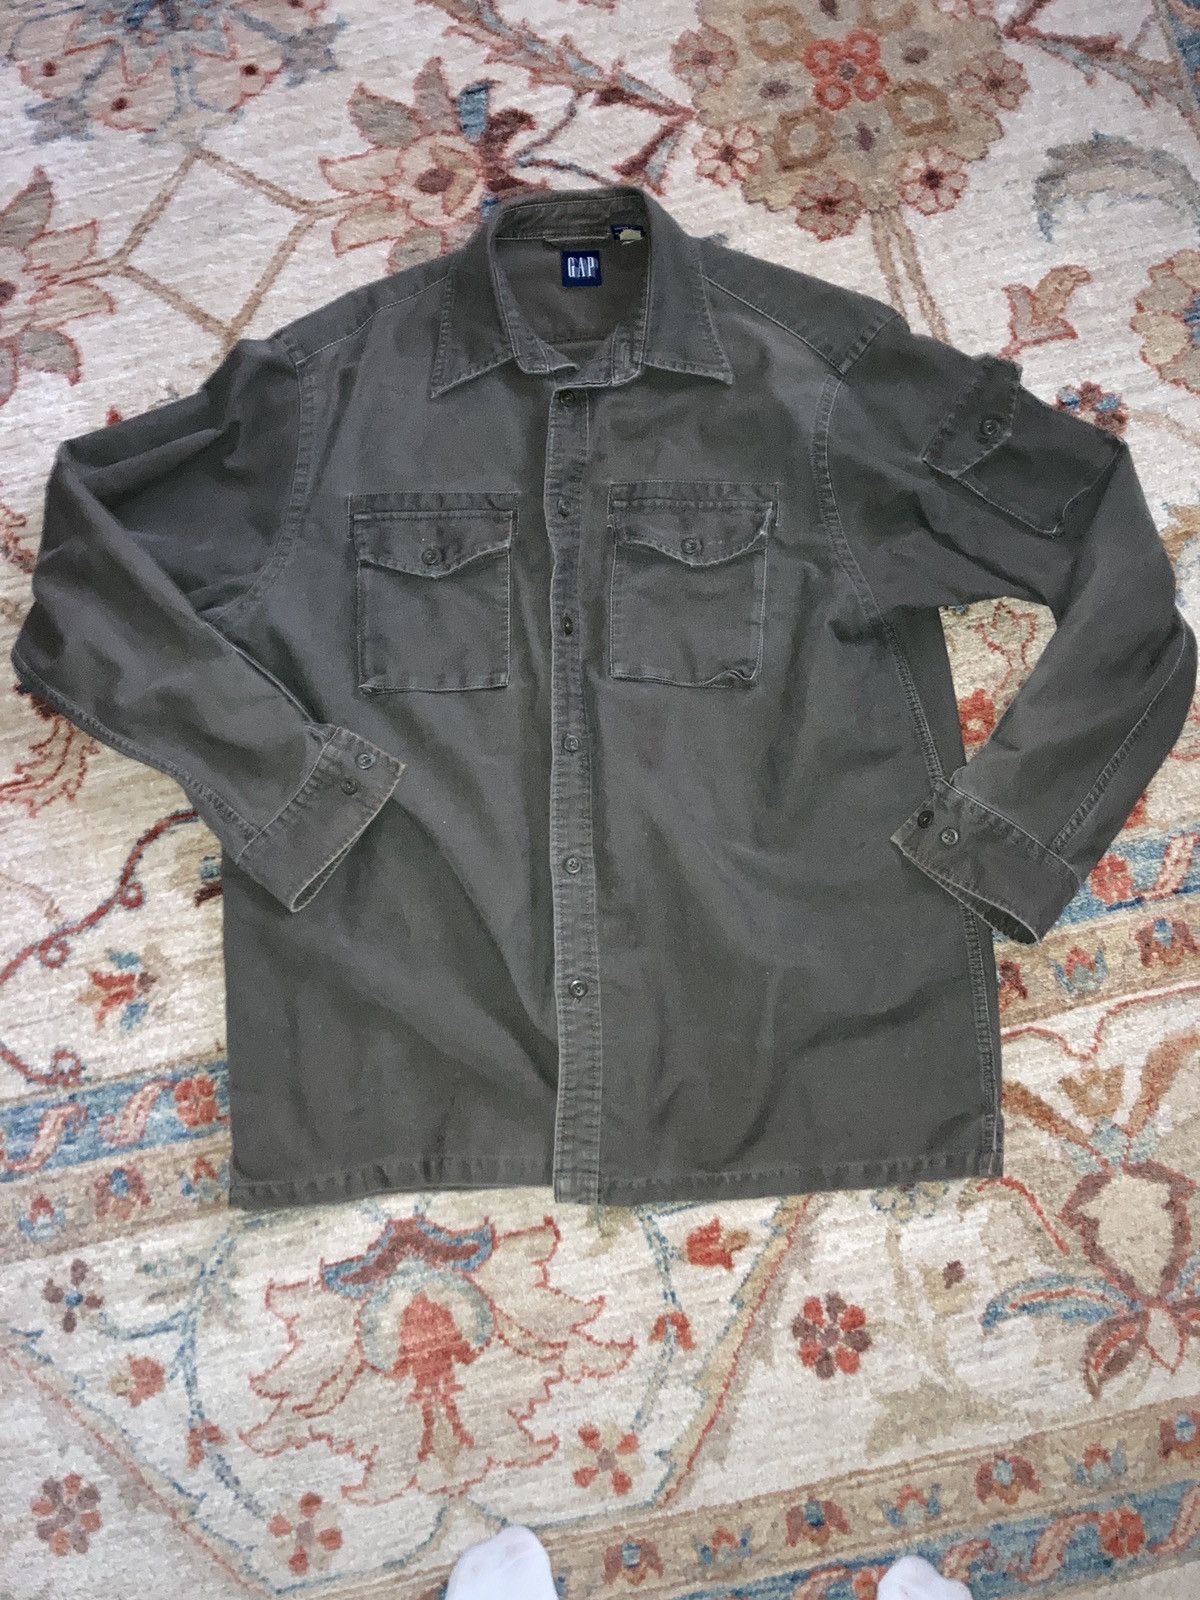 Vintage VTG GAP Military Army Olive Heavy Button Shirt Large Size US XL / EU 56 / 4 - 5 Thumbnail